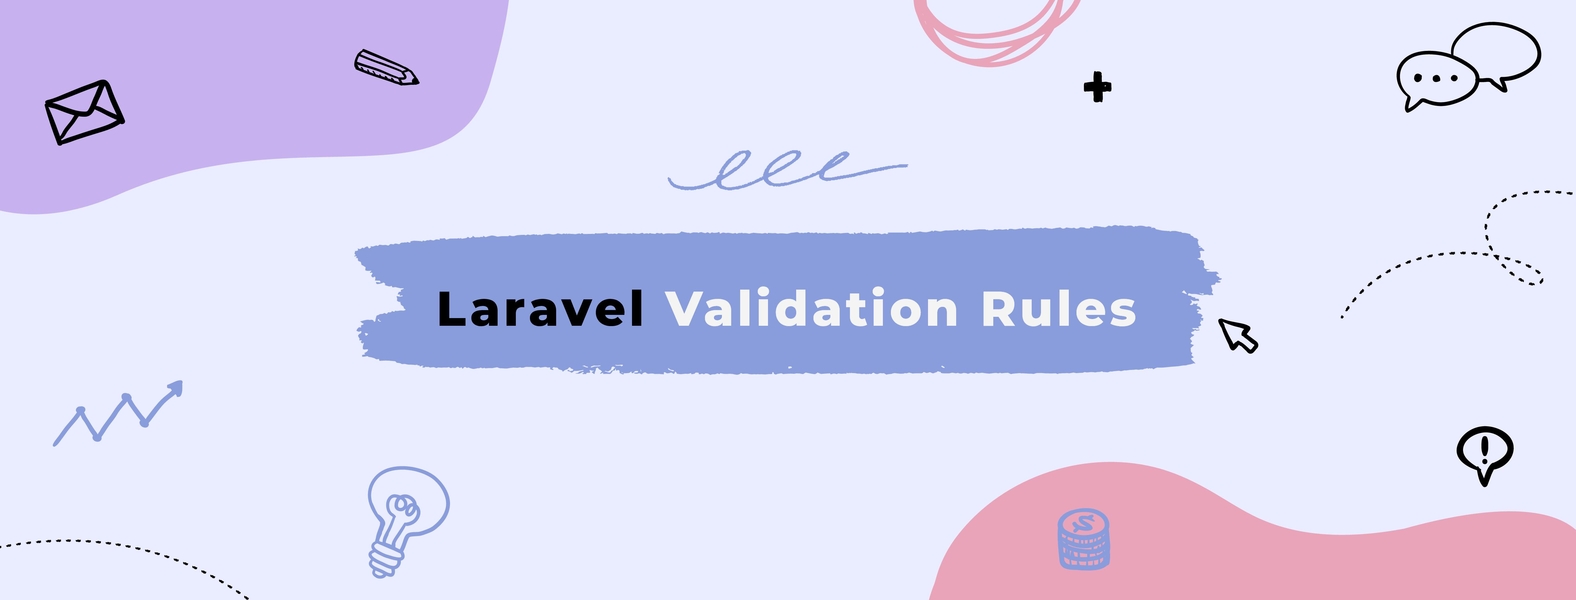 A set of useful Laravel validation rules